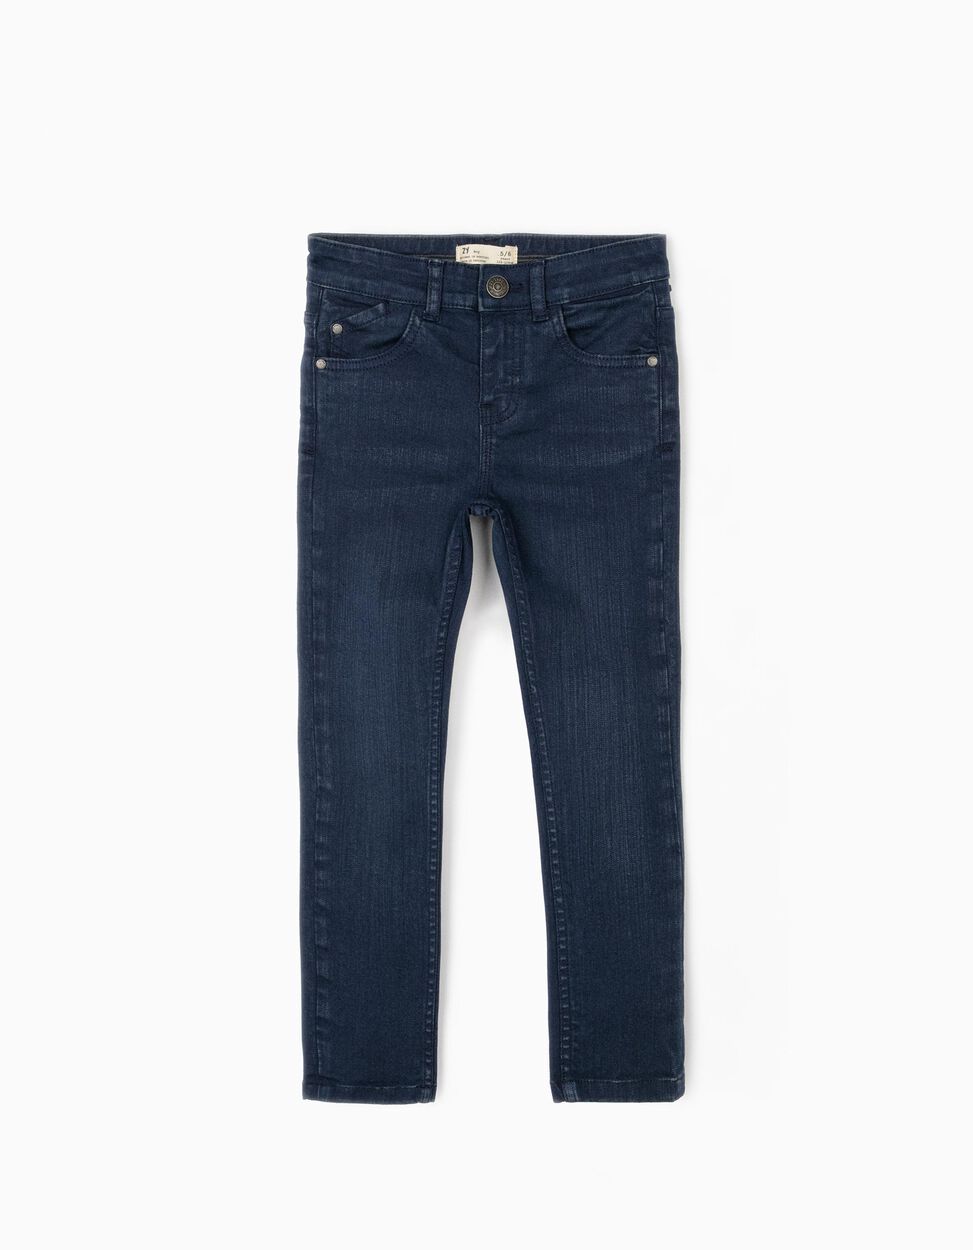 Twill Trousers for Boys 'Skinny Fit', Dark Blue | Zippy Online